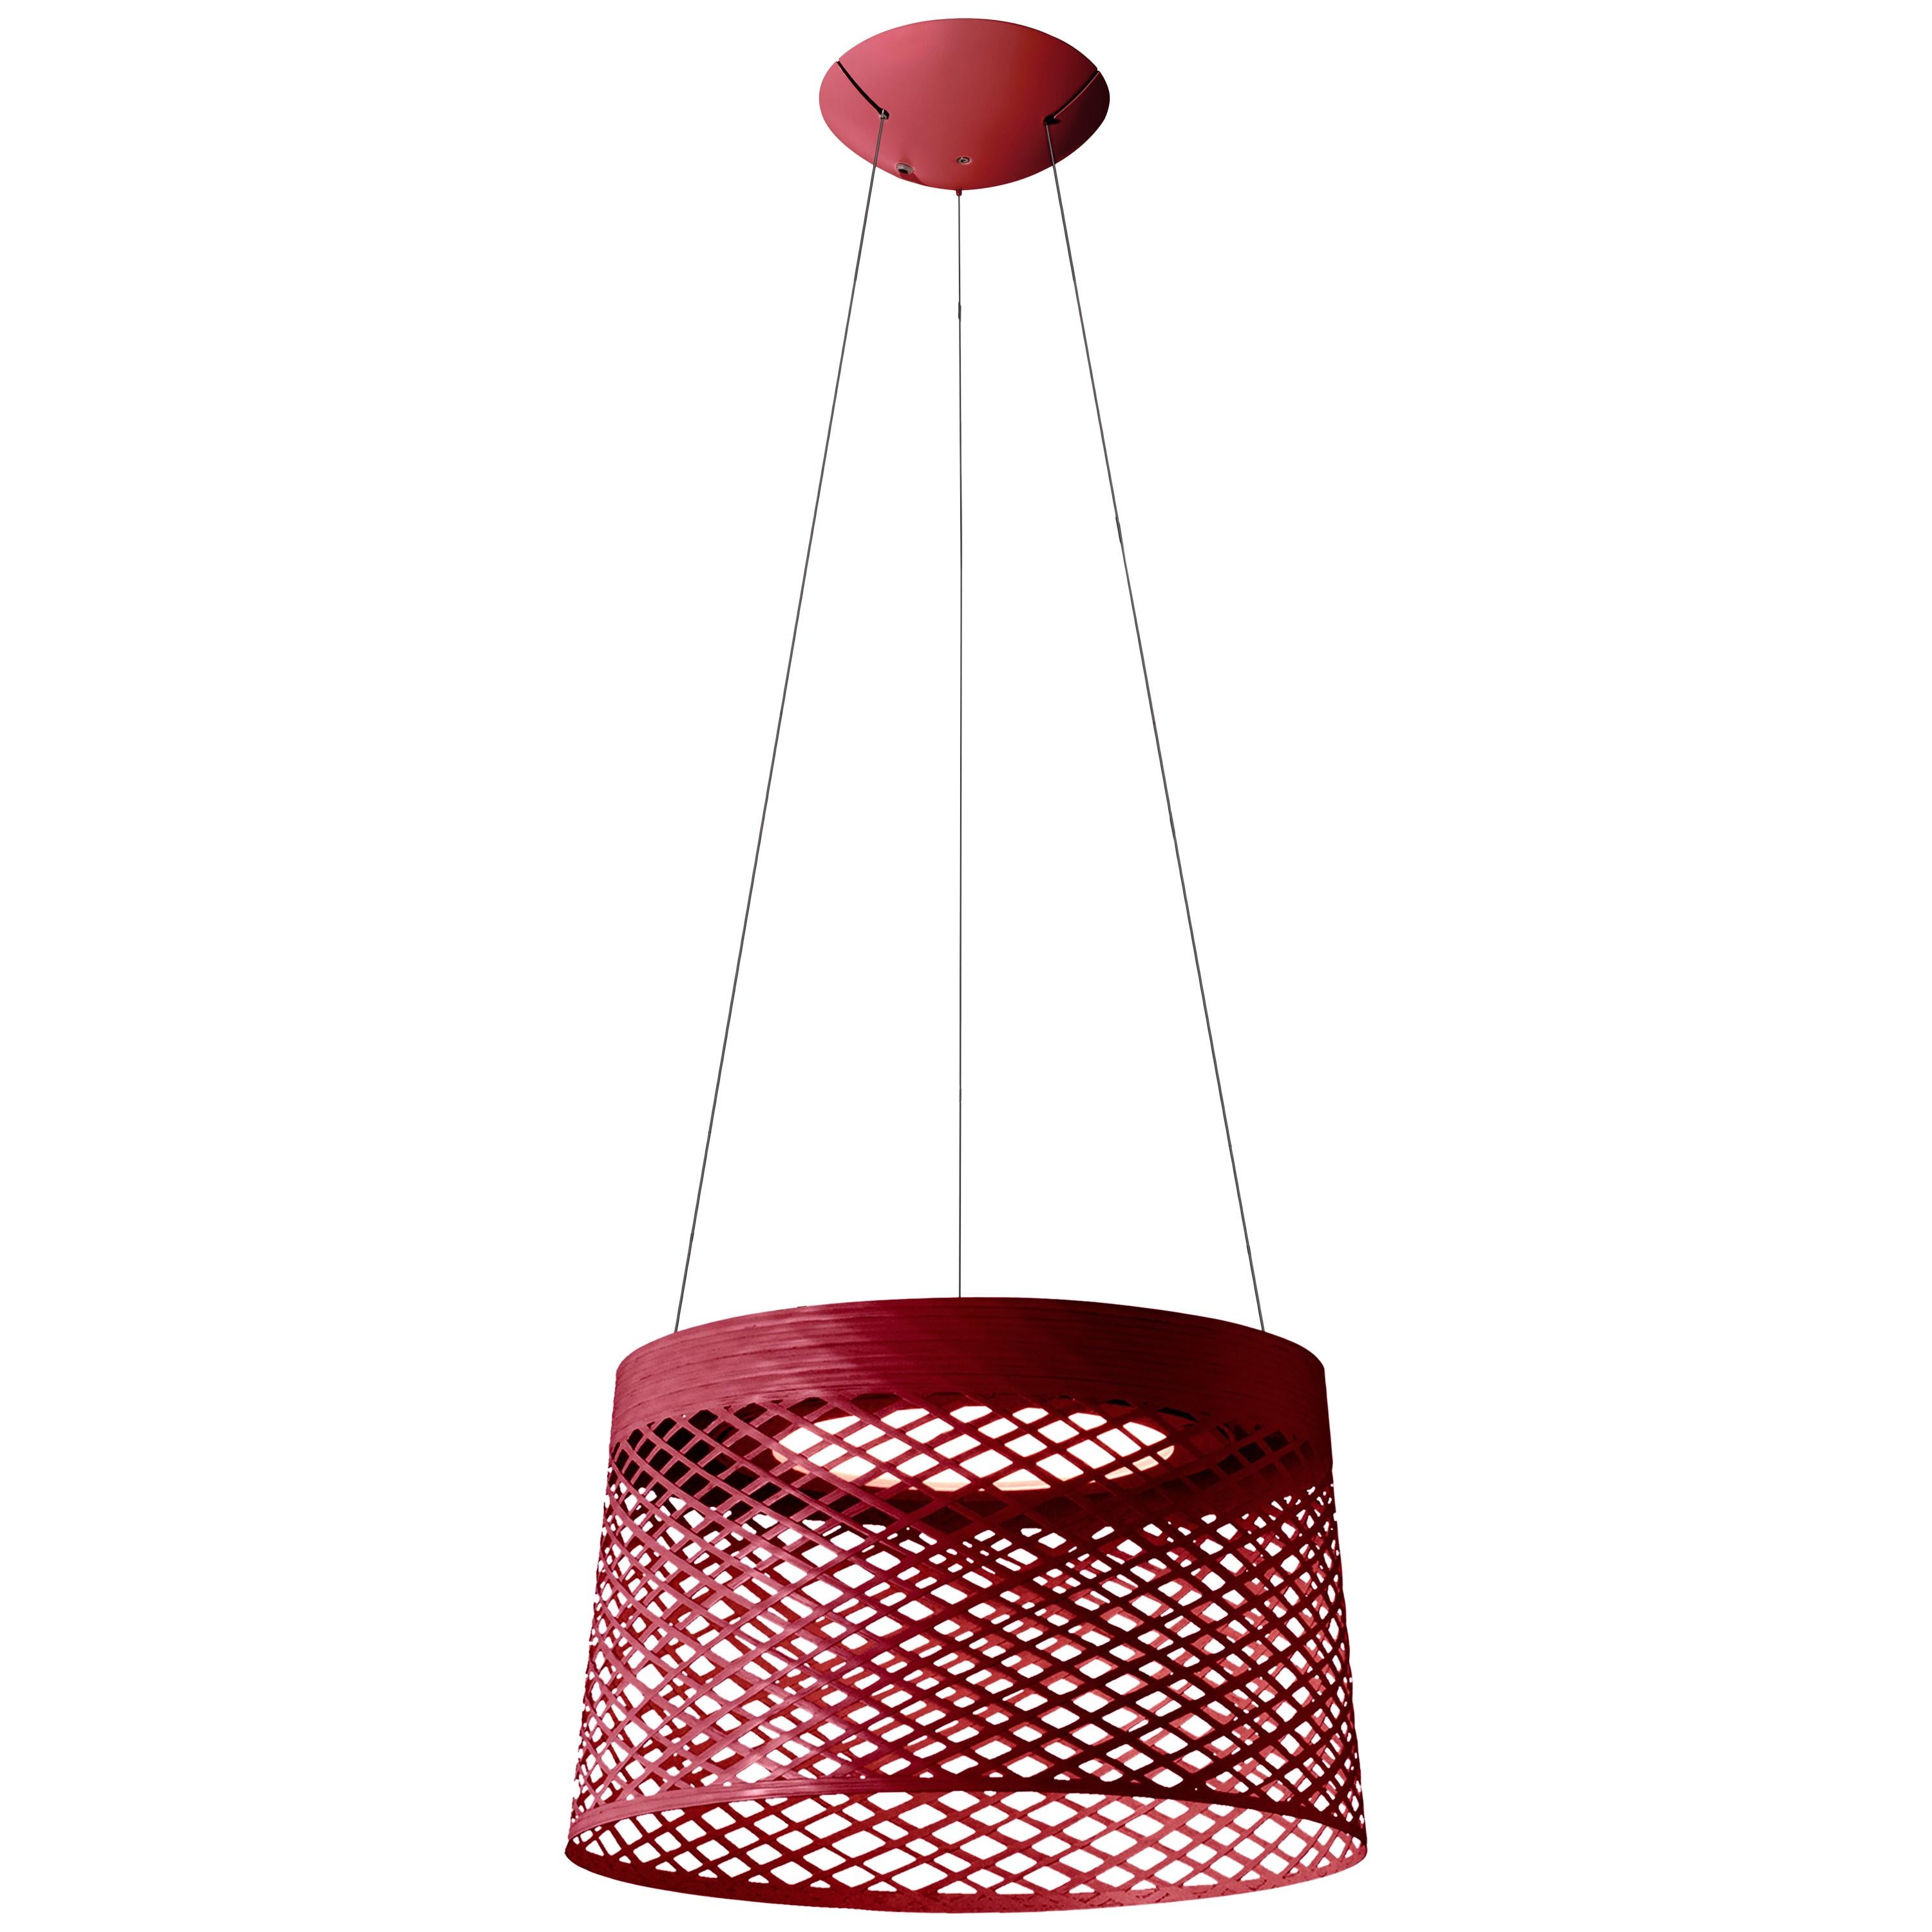 Foscarini Twiggy Grid Outdoor Suspension Lamp in Carmine by Marc Sadler For Sale